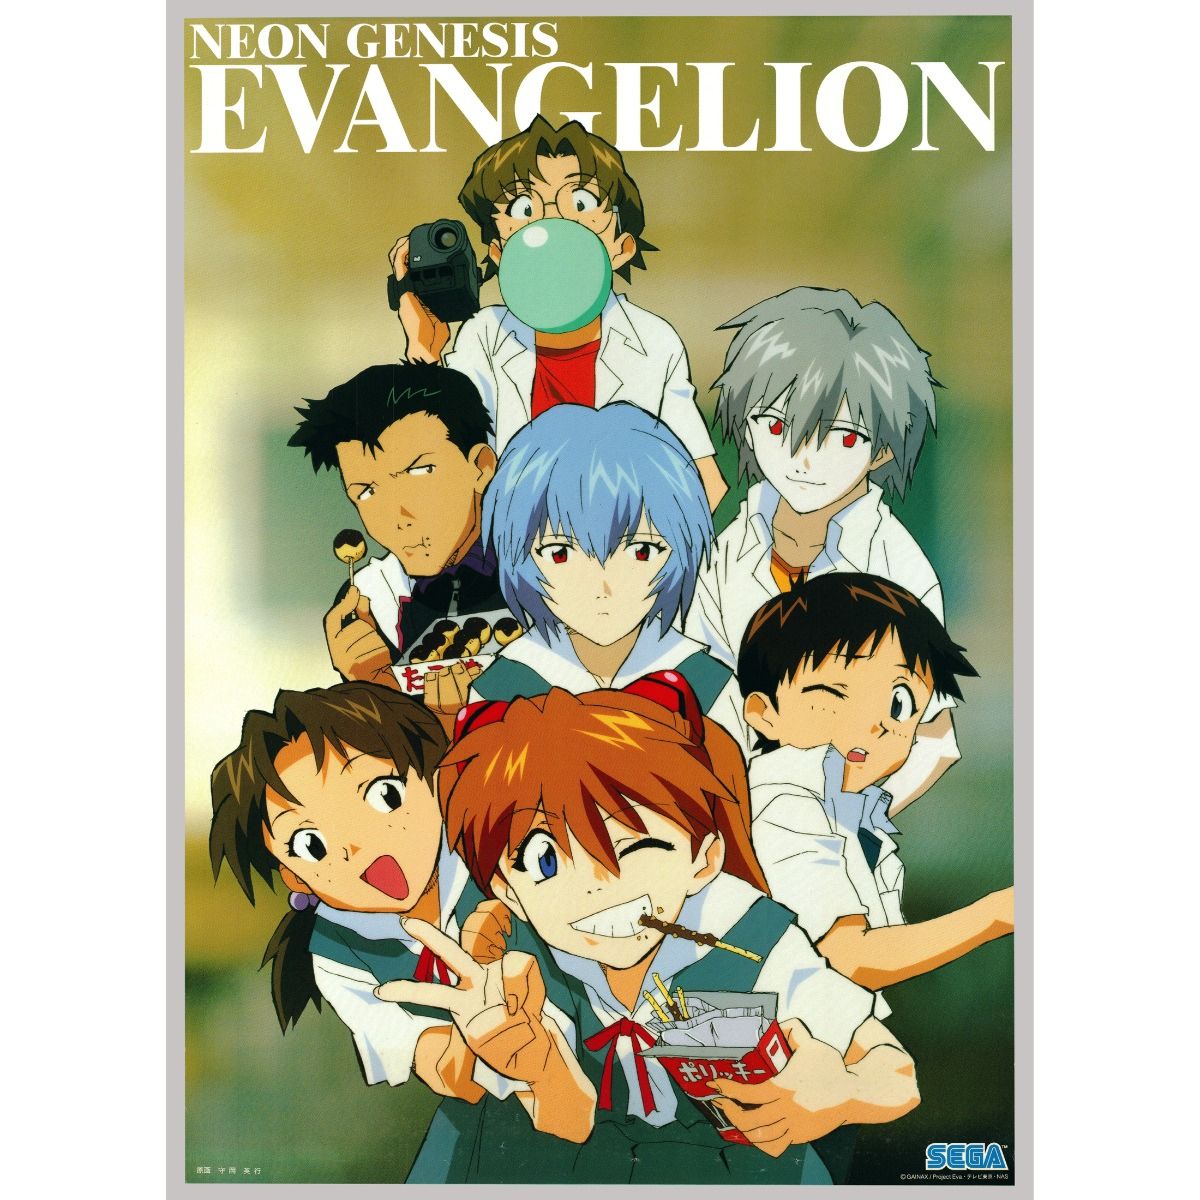 Buy Original Neon Genesis Evangelion Anime Poster Online